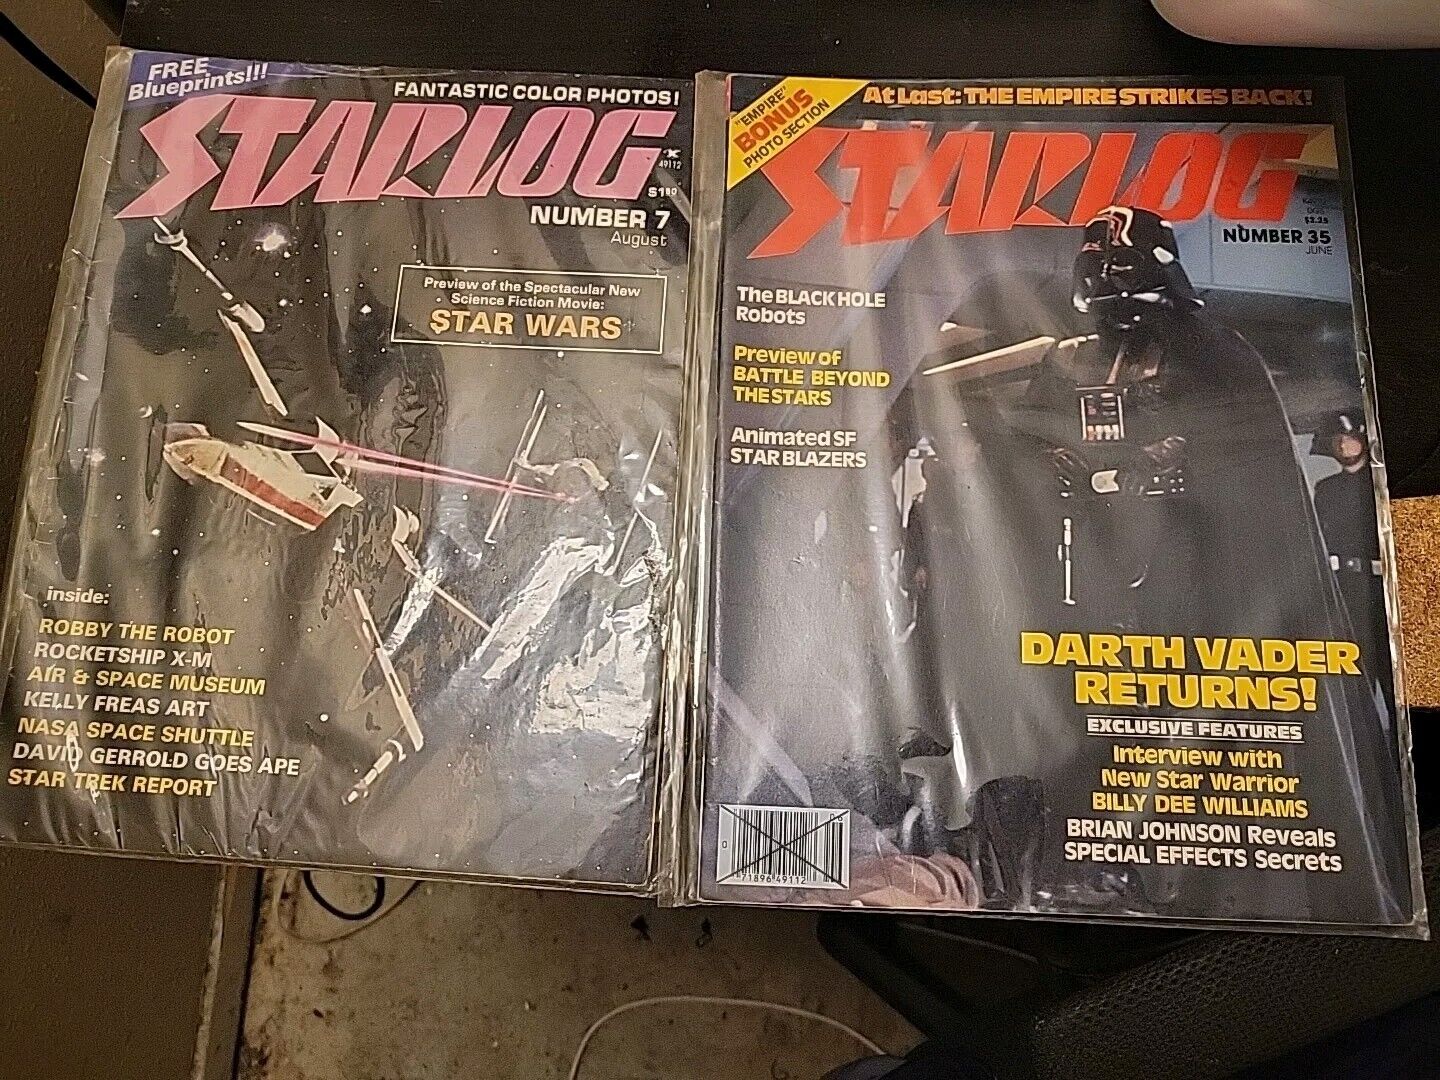 STARLOG Magazine #7 August 1977  Star Wars, Number 35 Darth Vader Returns